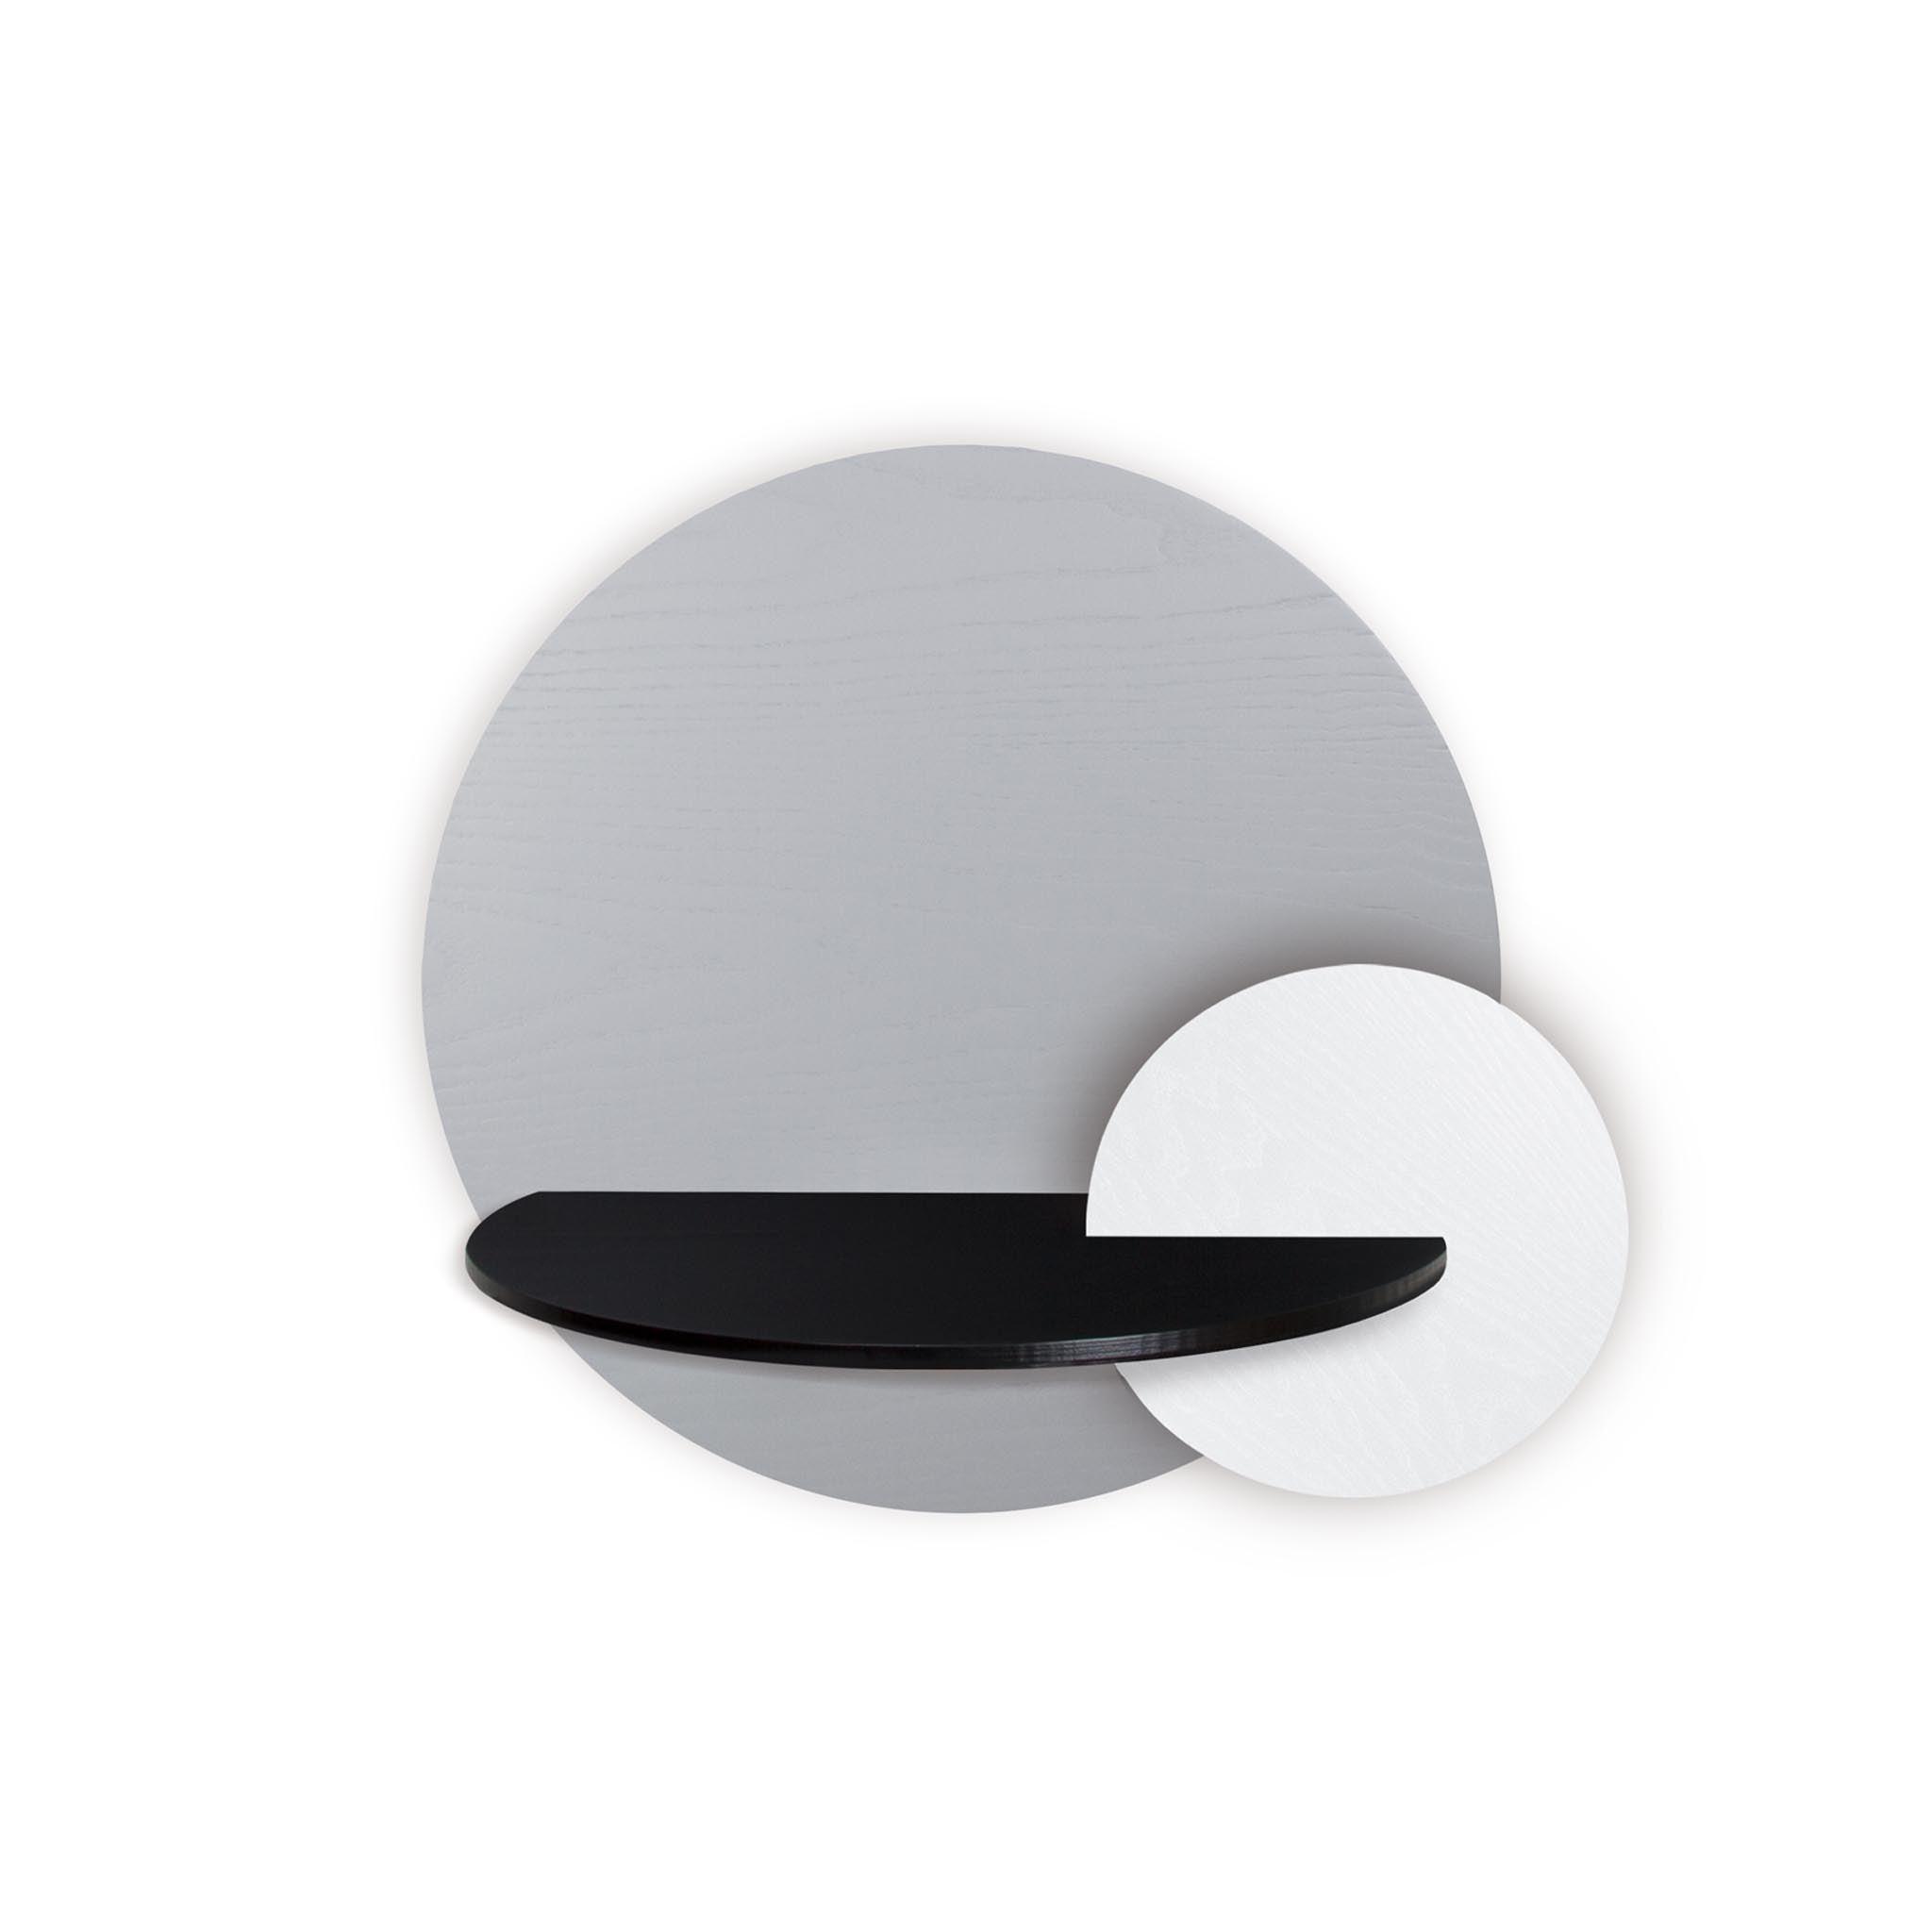 Alba floating nightstand DUO · Grey circle